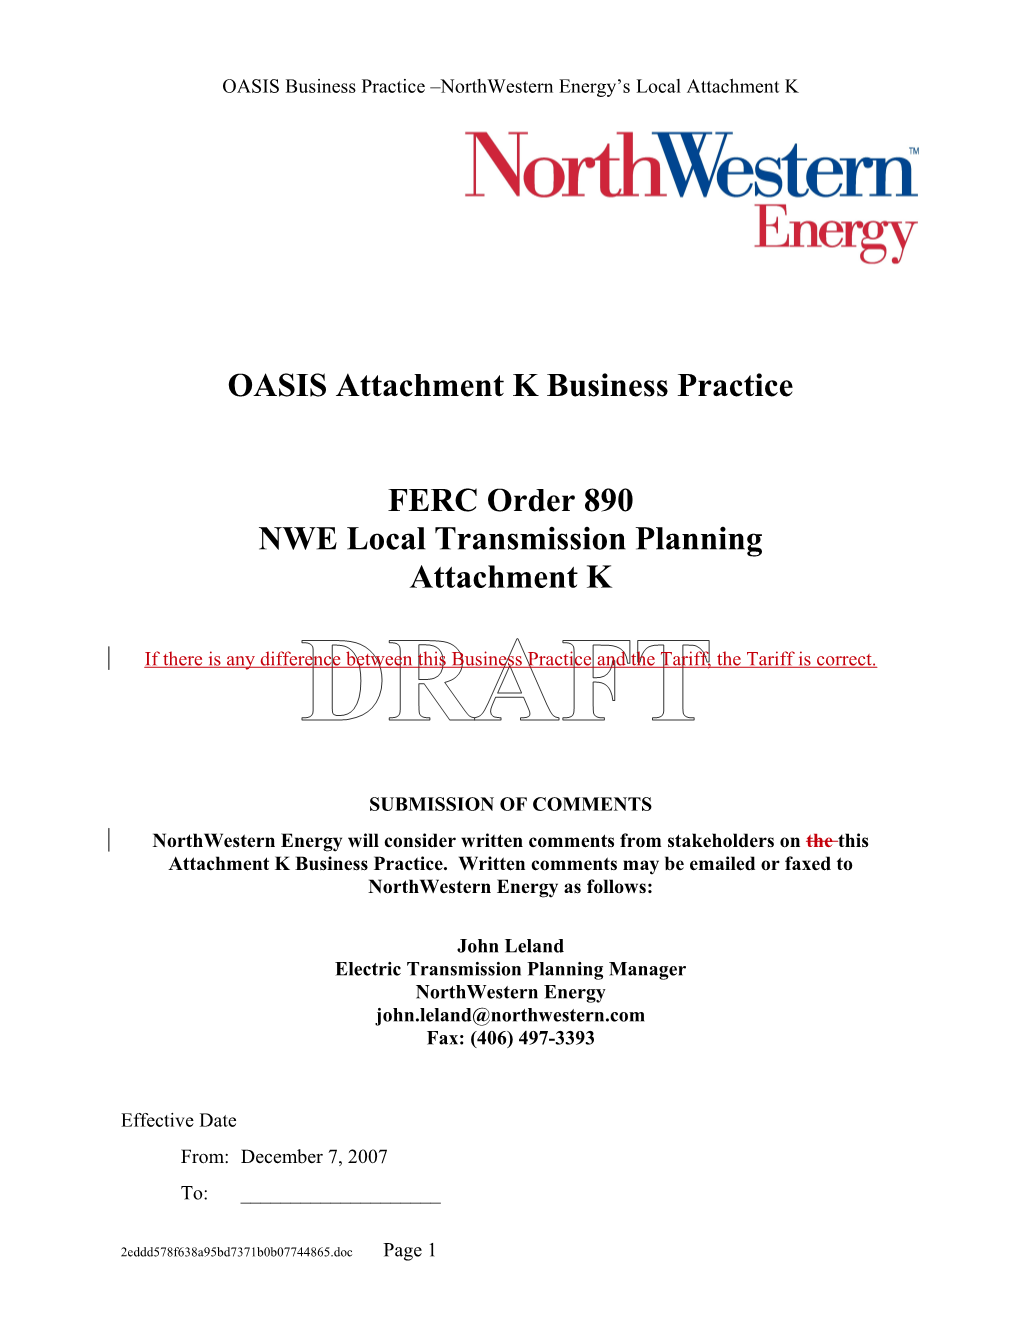 OASIS Attachment K Business Practice